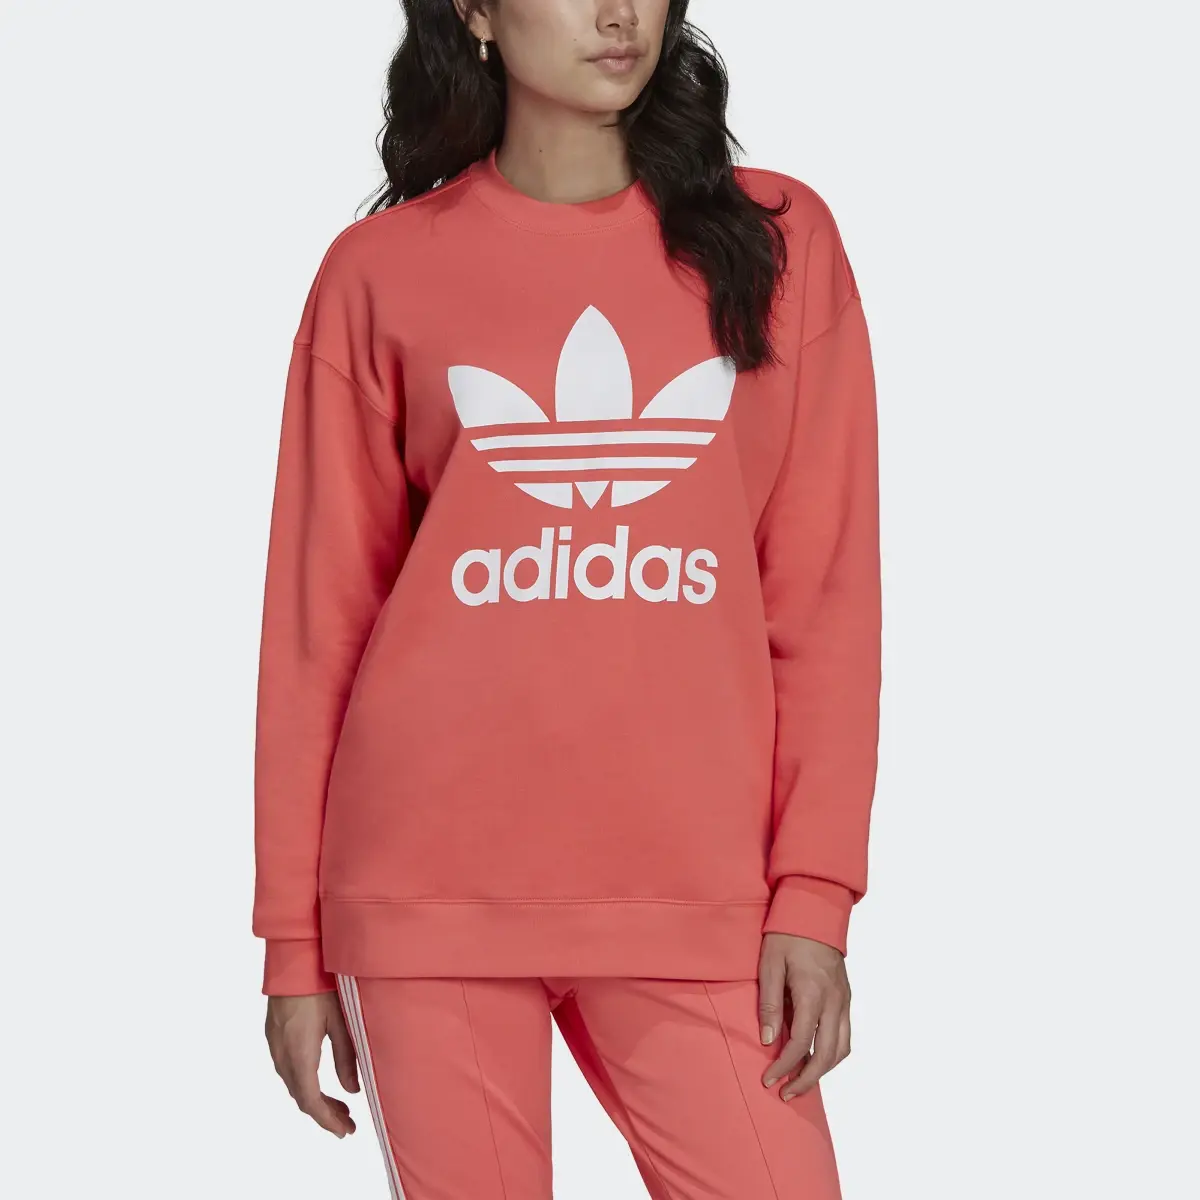 Adidas Trefoil Crew Sweatshirt. 1